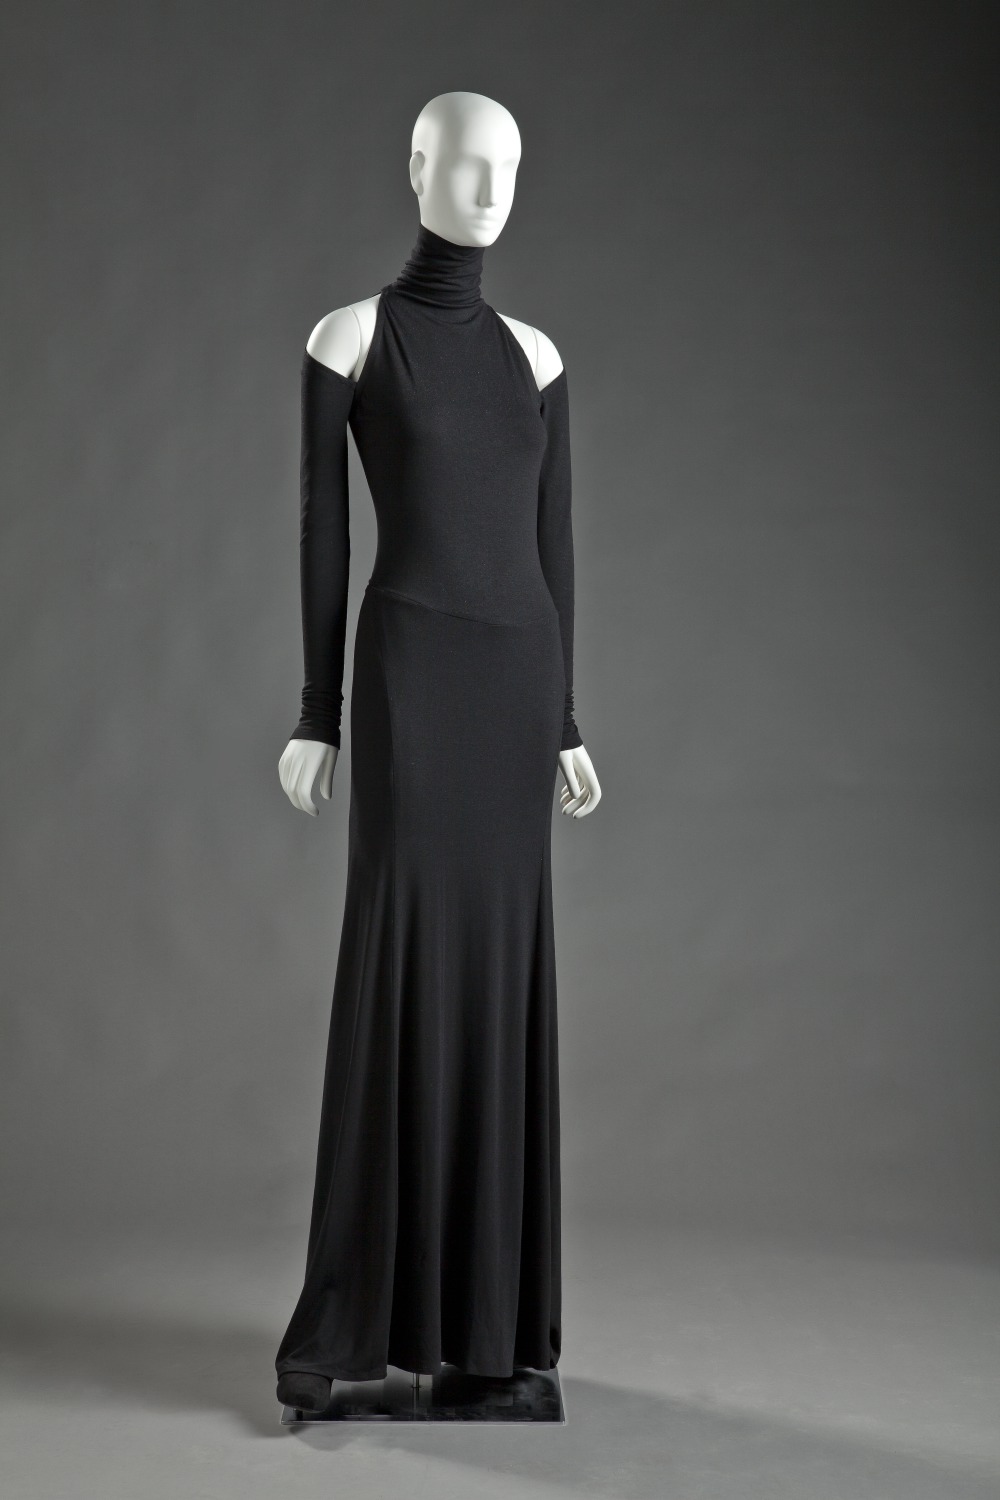 Donna Karan, Long-sleeve black dress, fall 2010. Jersey. Gift of Donna Karan in honor of the exhibition Extending the Runway: Tatiana Sorokko Style.